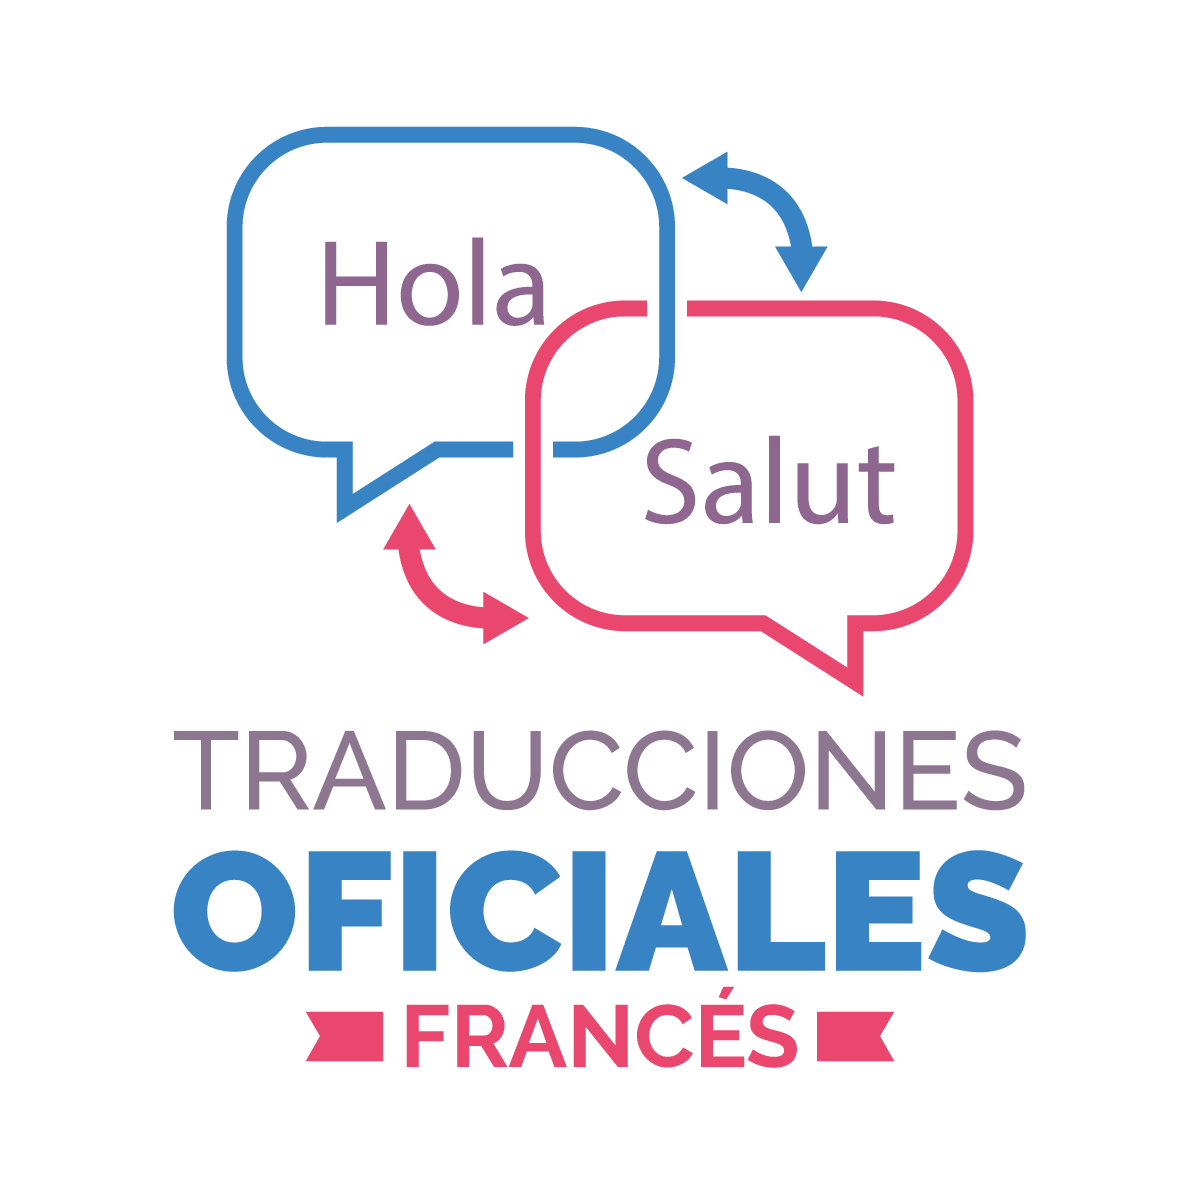 TRADUCCIONES OFICIALES DE ESPAÑOL A FRANCÉS